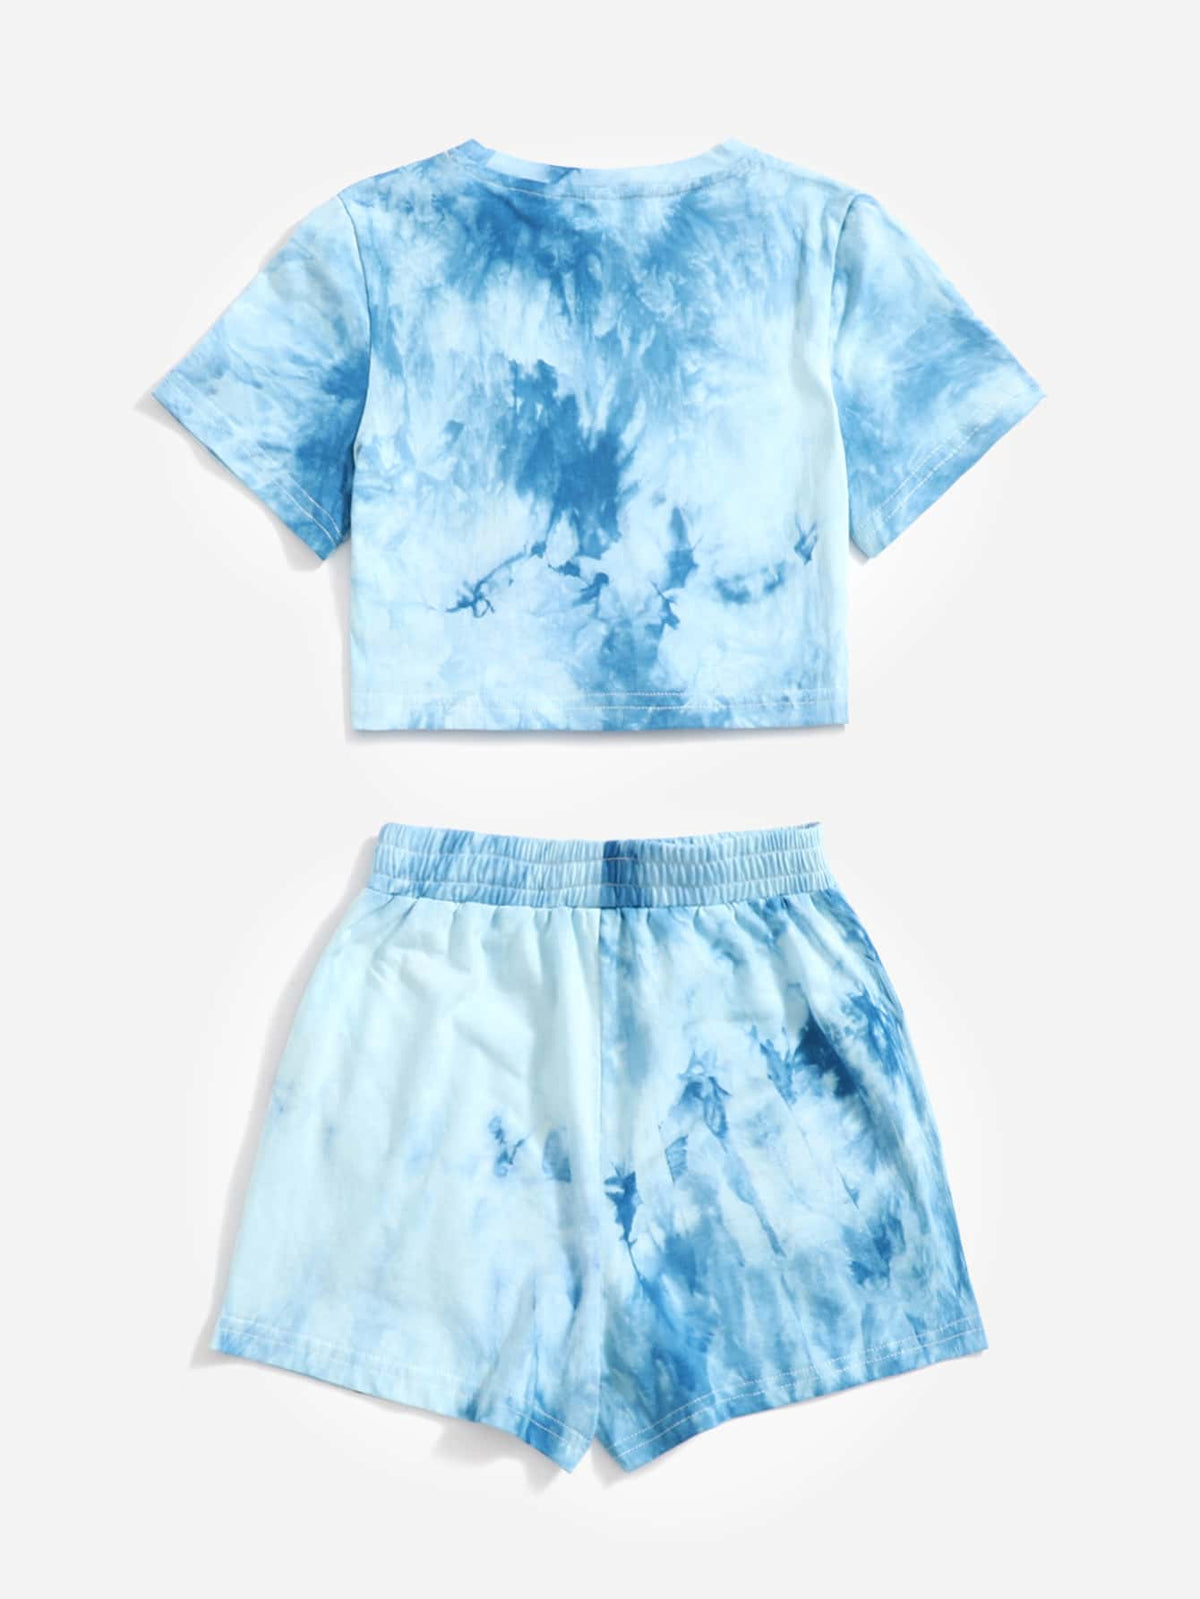 Kids EVRYDAY Girls Tie Dye Tee Track Shorts Set